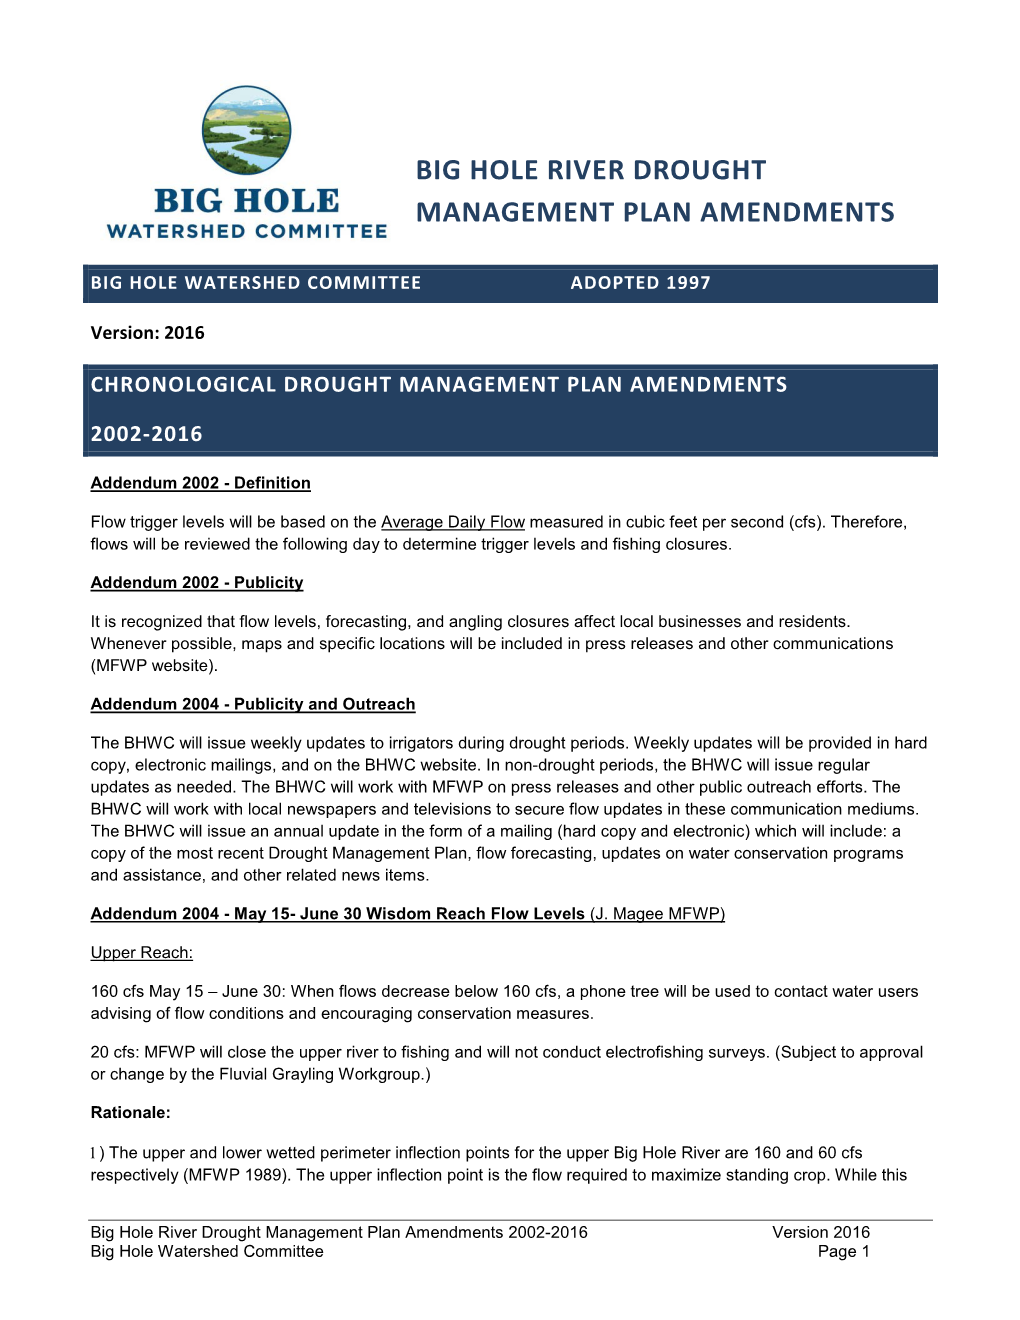 Big Hole River Drought Management Plan Amendments